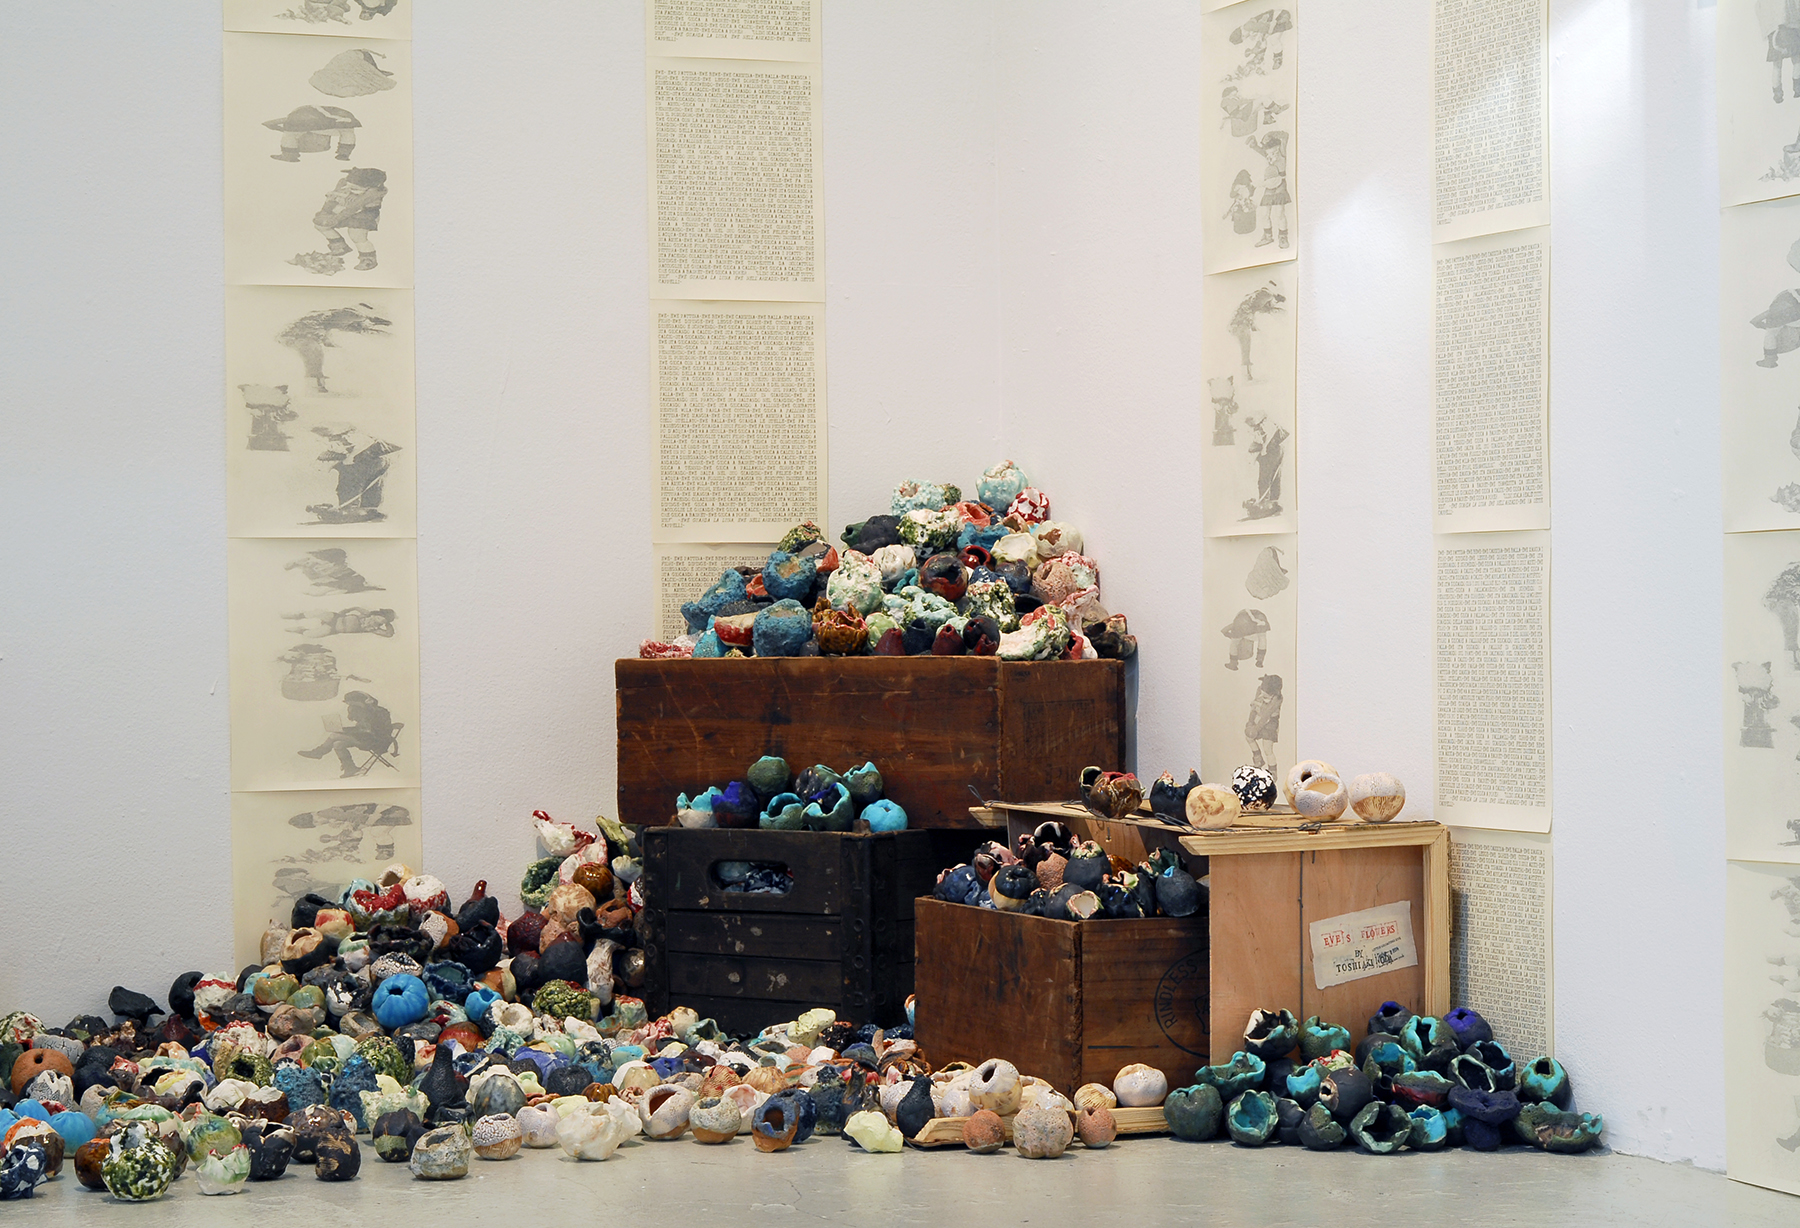  2014 Gallery View,&nbsp;Toshiaki Noda's installation of ceramics&nbsp;"Eve's Flowers".&nbsp;Photos by Samantha Wrigglesworth 